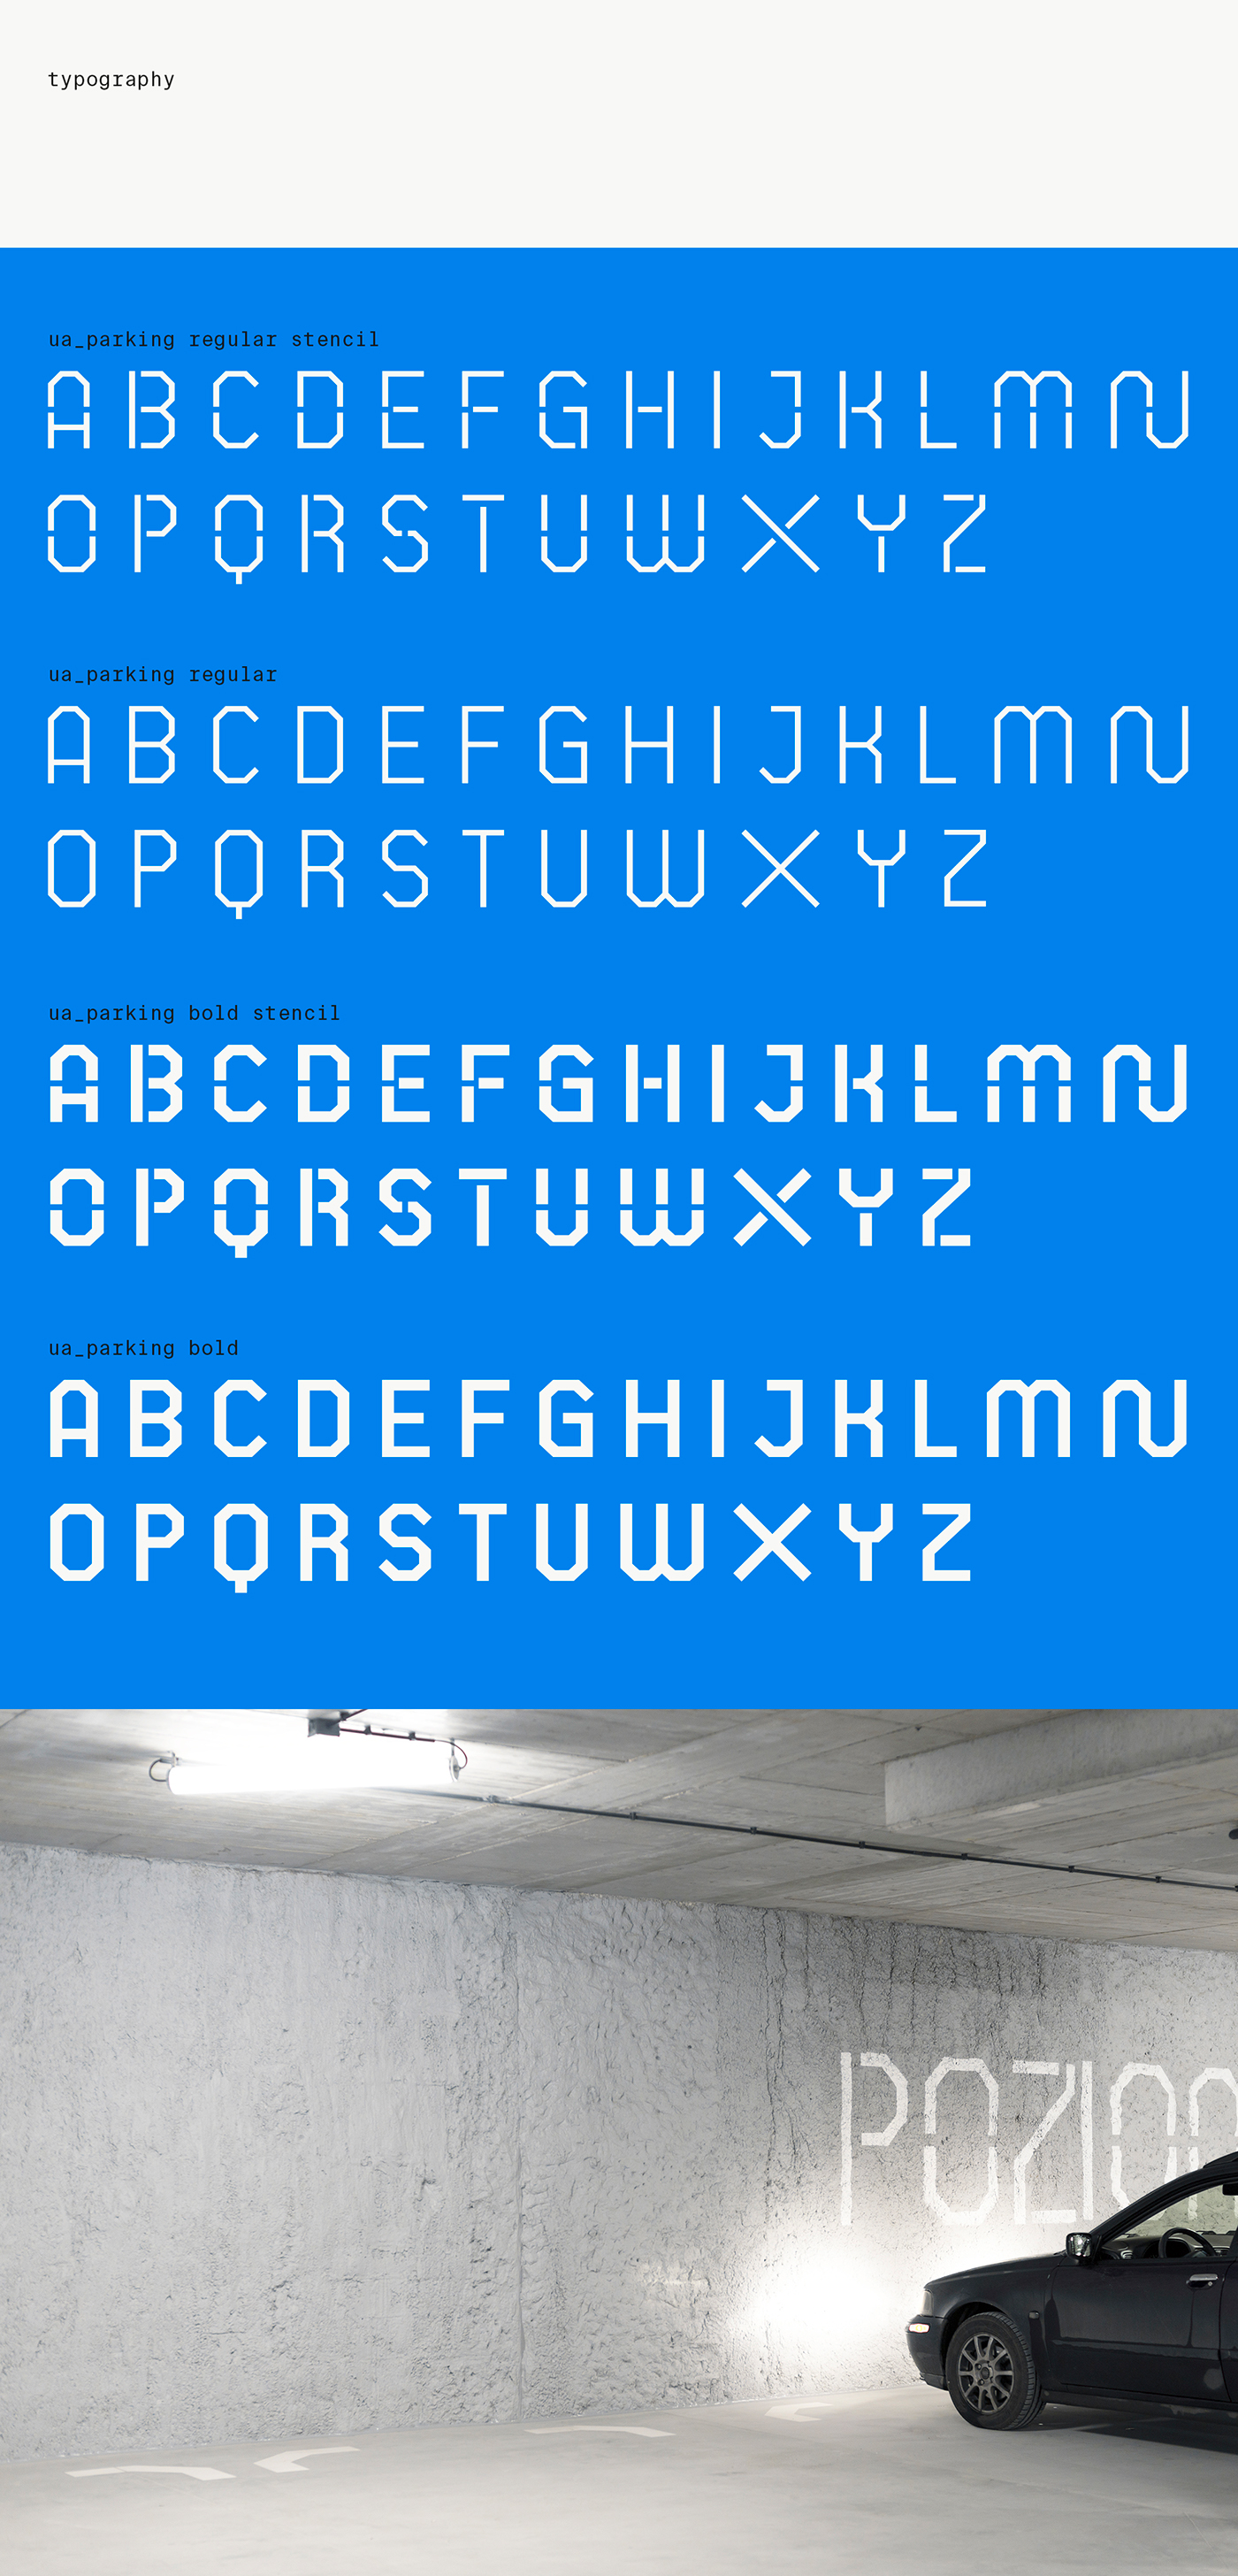 wayfinding Signage type typography   Interior parking architecture